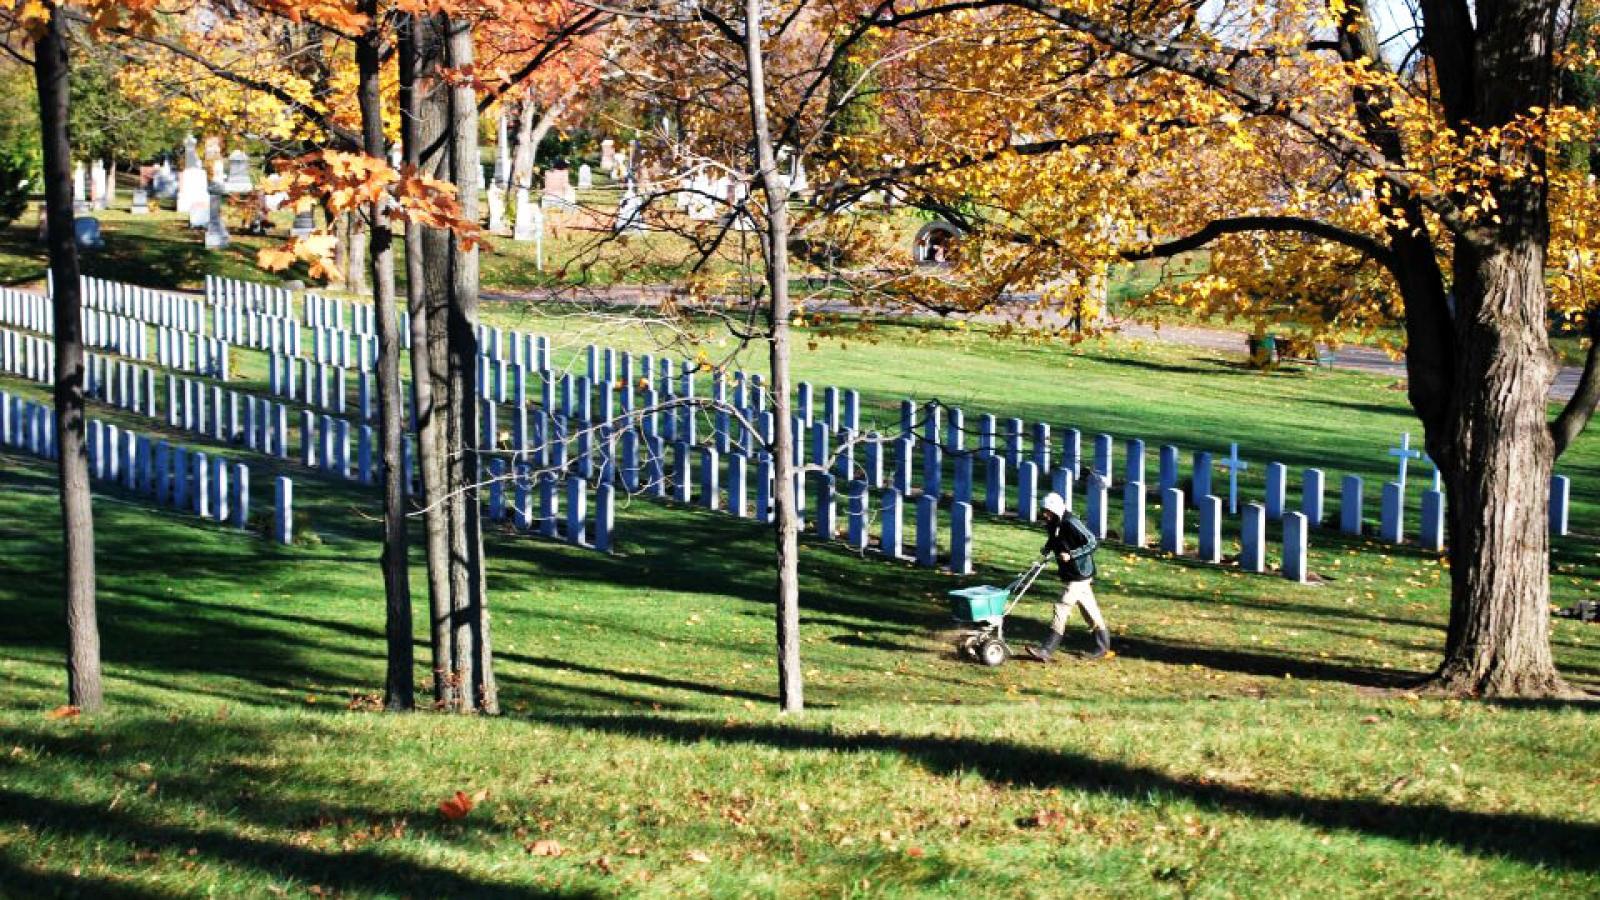 LO volunteers keep the military cemetery beautiful.